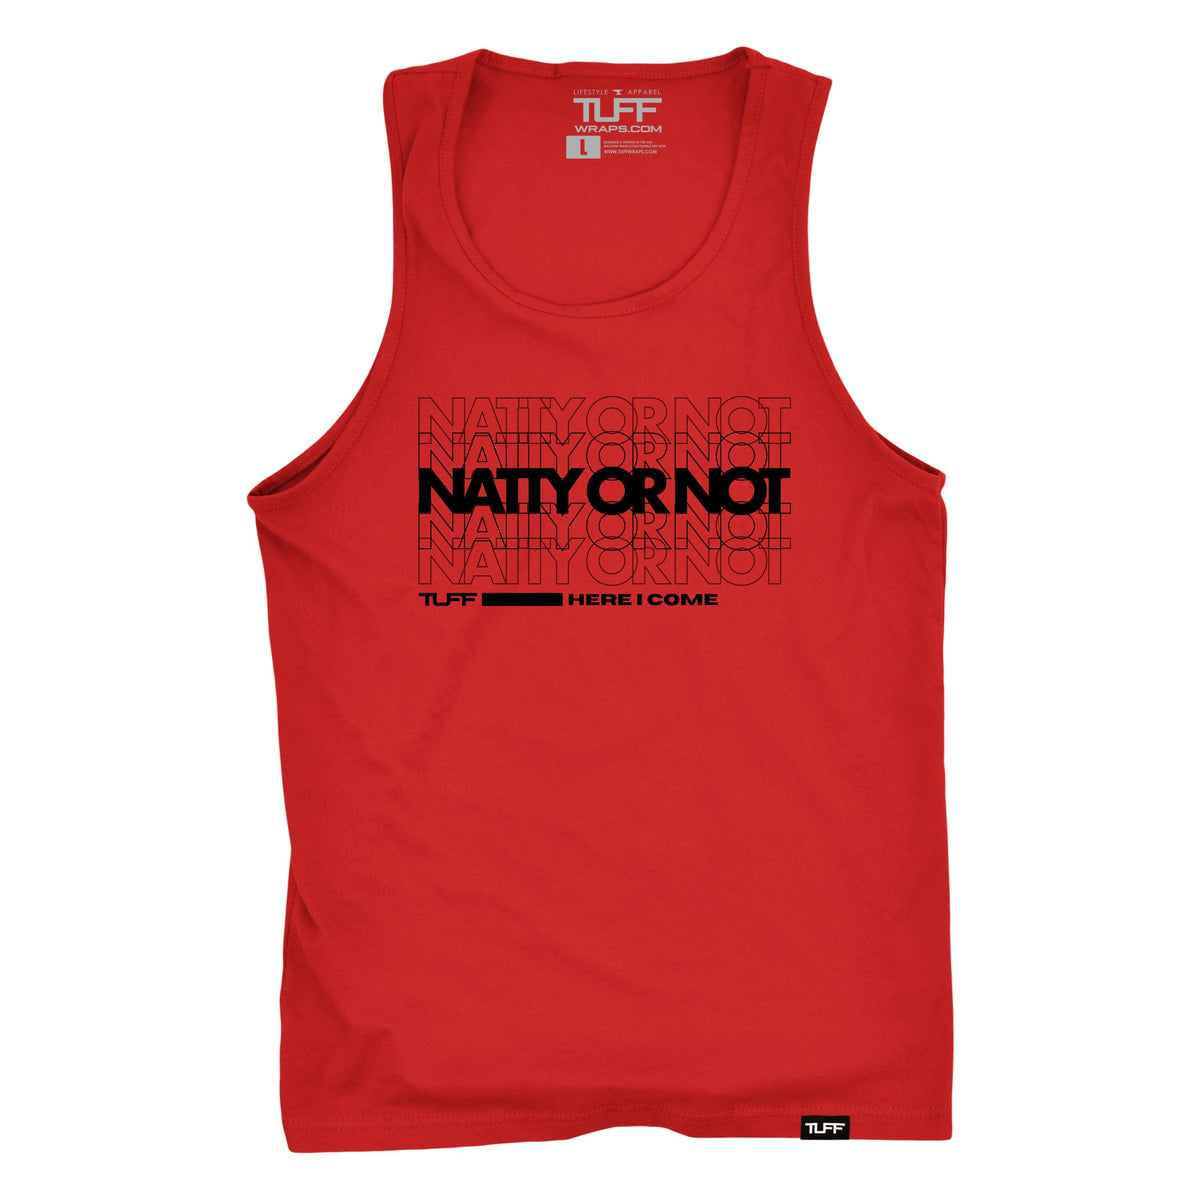 Natty Or Not Tank S / Red TuffWraps.com